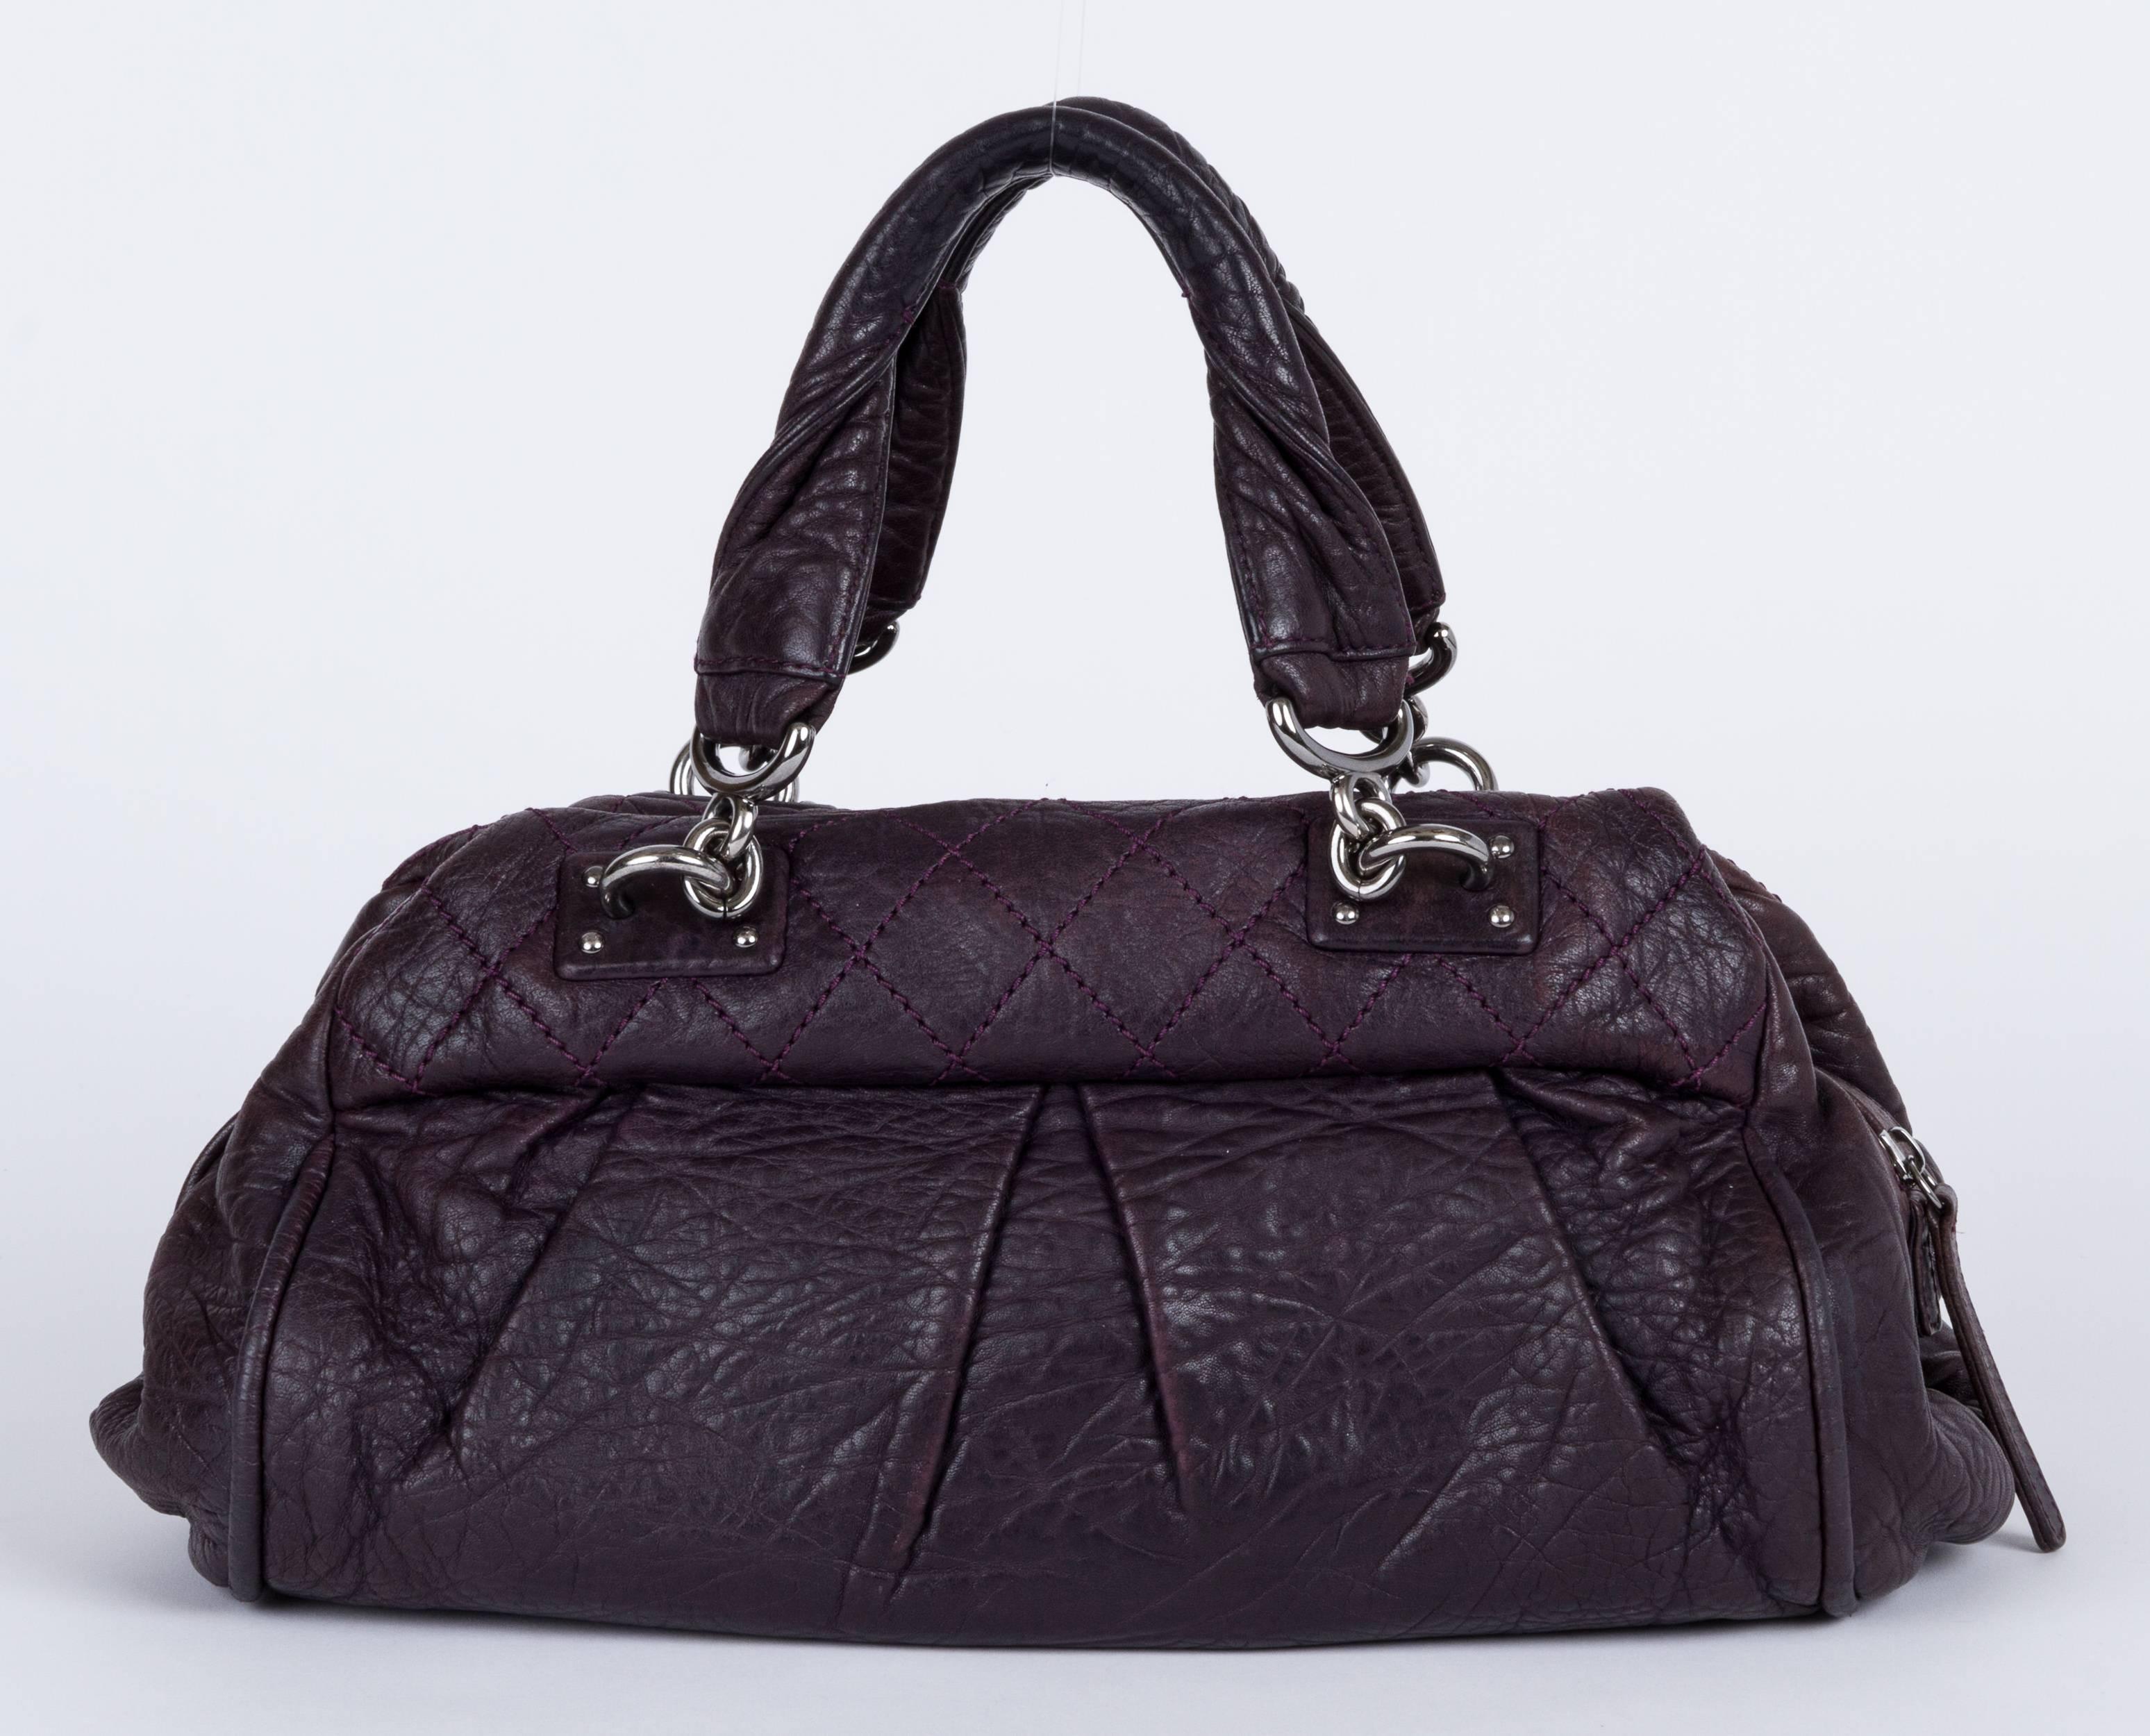 Black Chanel Eggplant Distressed Leather Bag